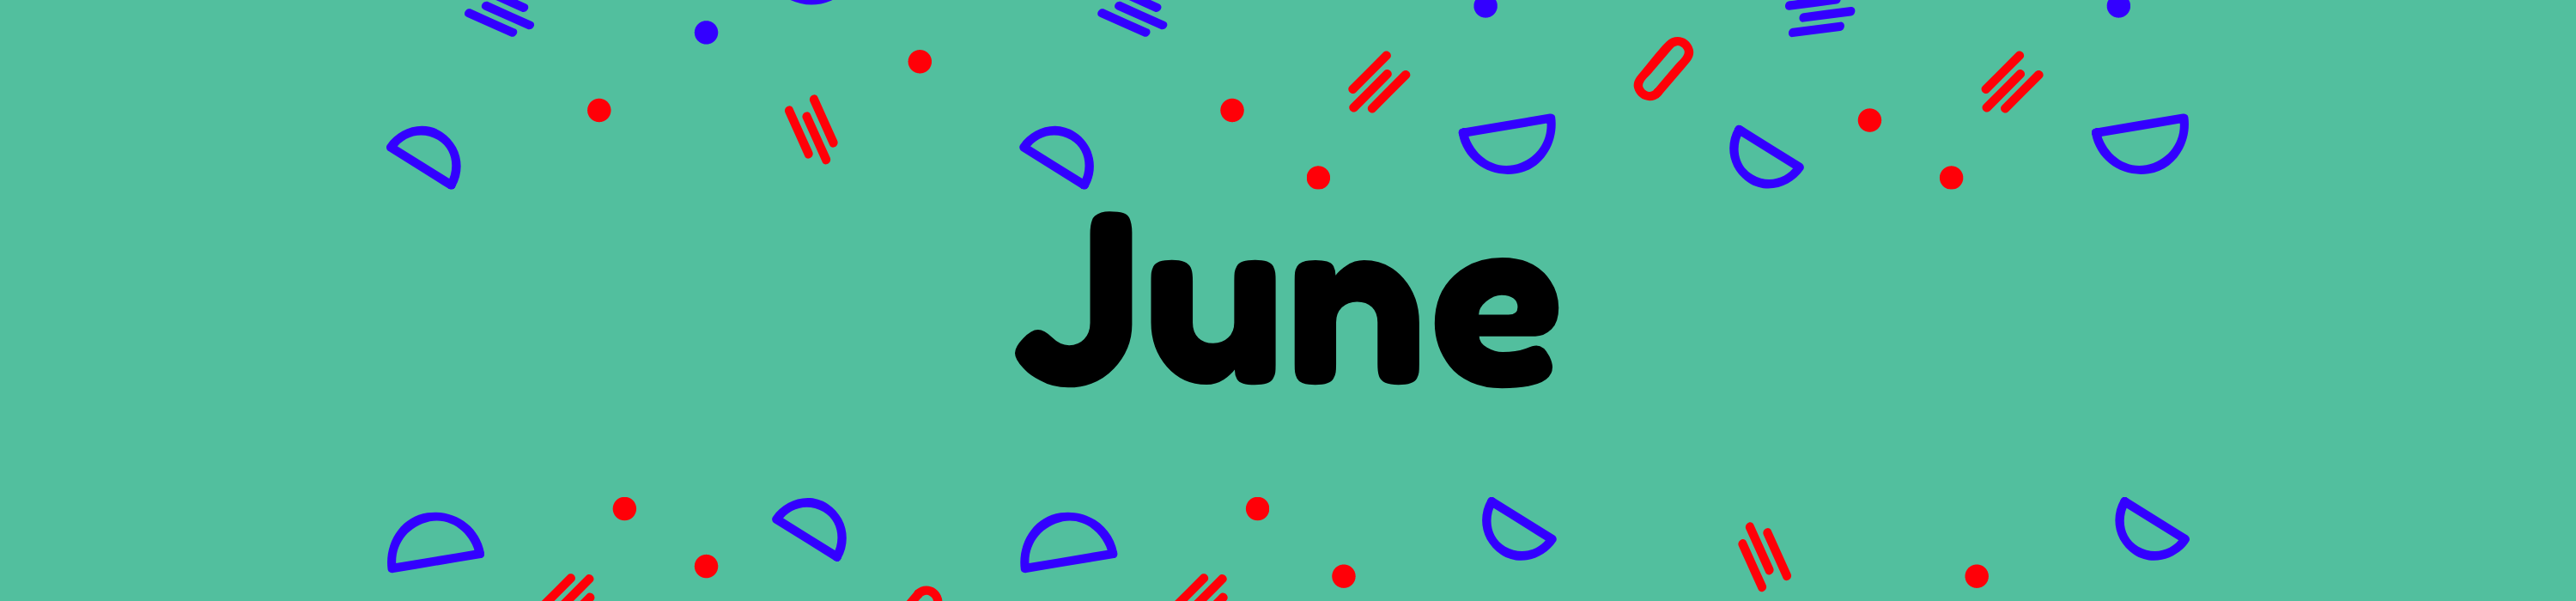 June-banner